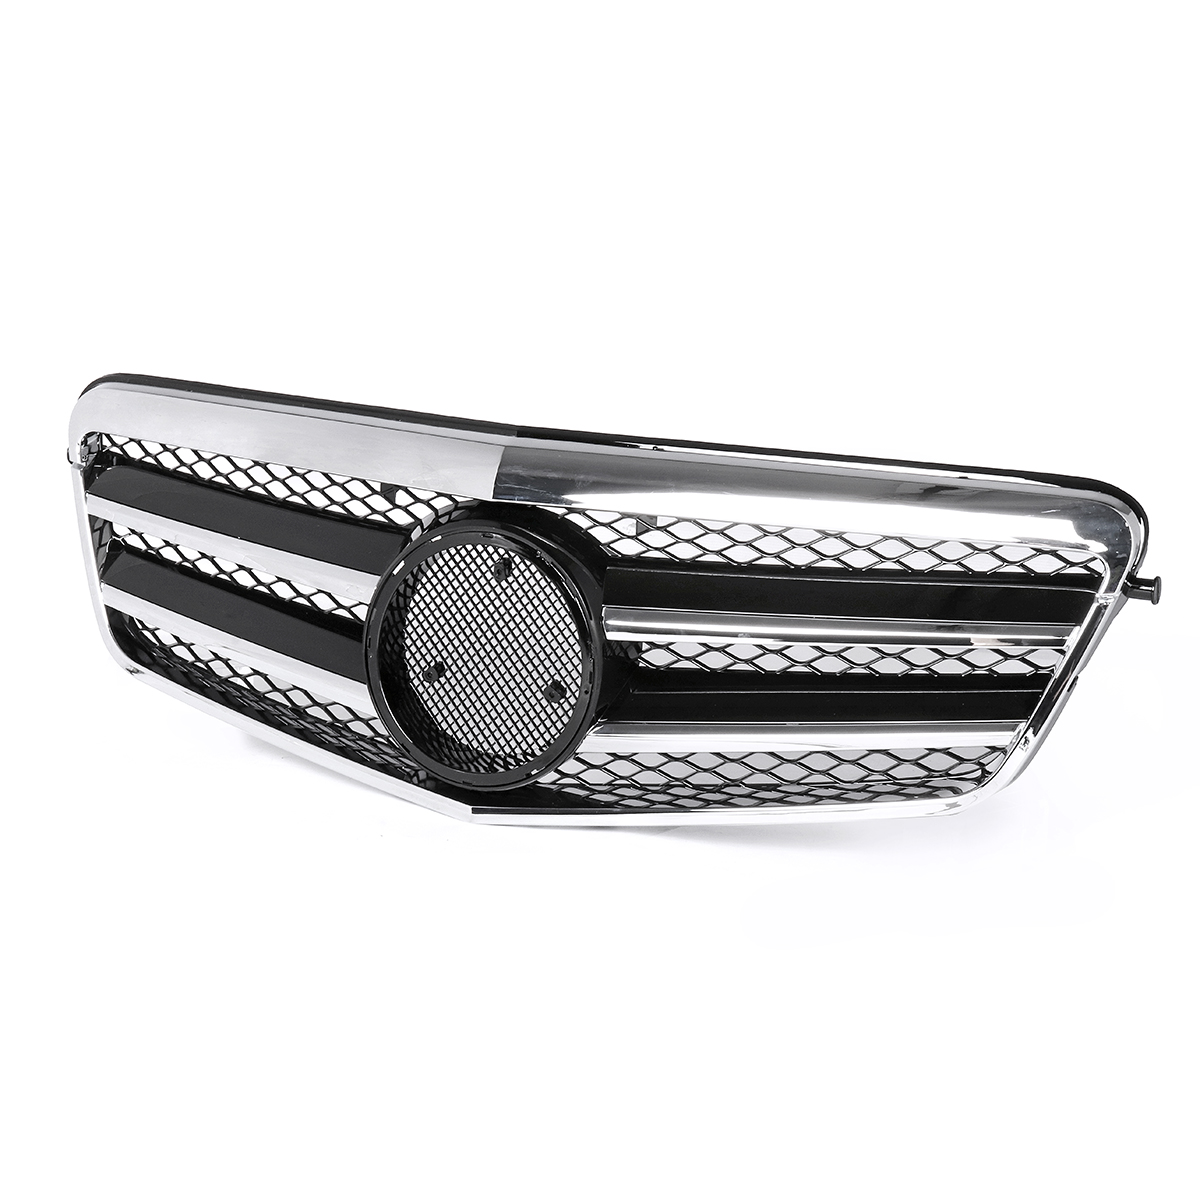 Chrome Silver AMG Style Front Grill Grille for Mercedes Benz W212 E250 E550 E350 E63 AMG 2010-2013